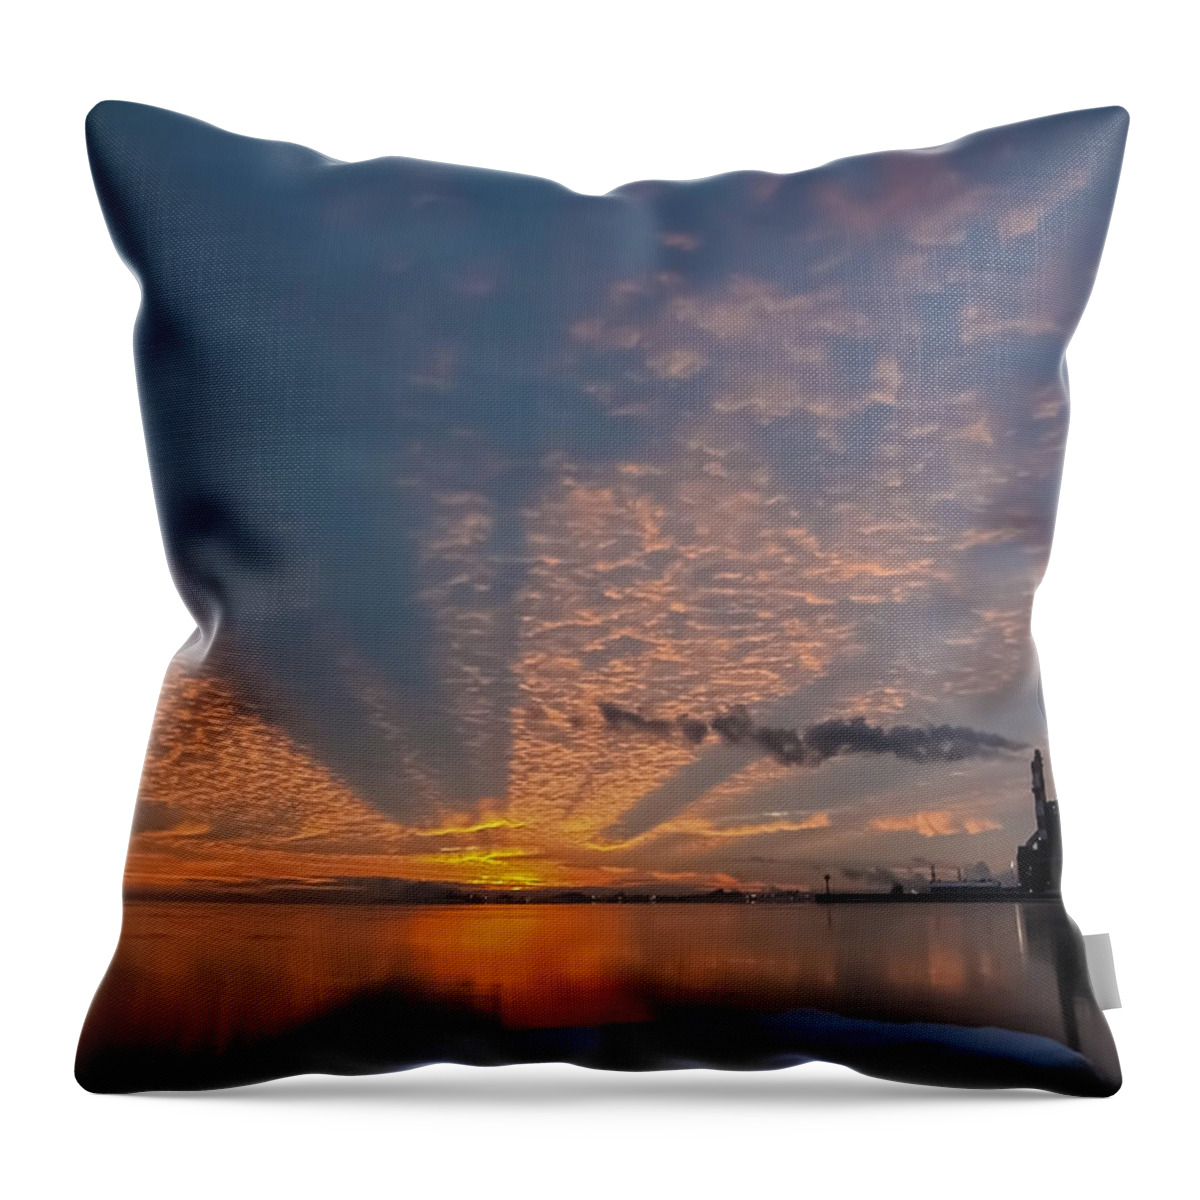 Lake Michgan Throw Pillow featuring the photograph Pretty Industrial Sunrise by Sven Brogren